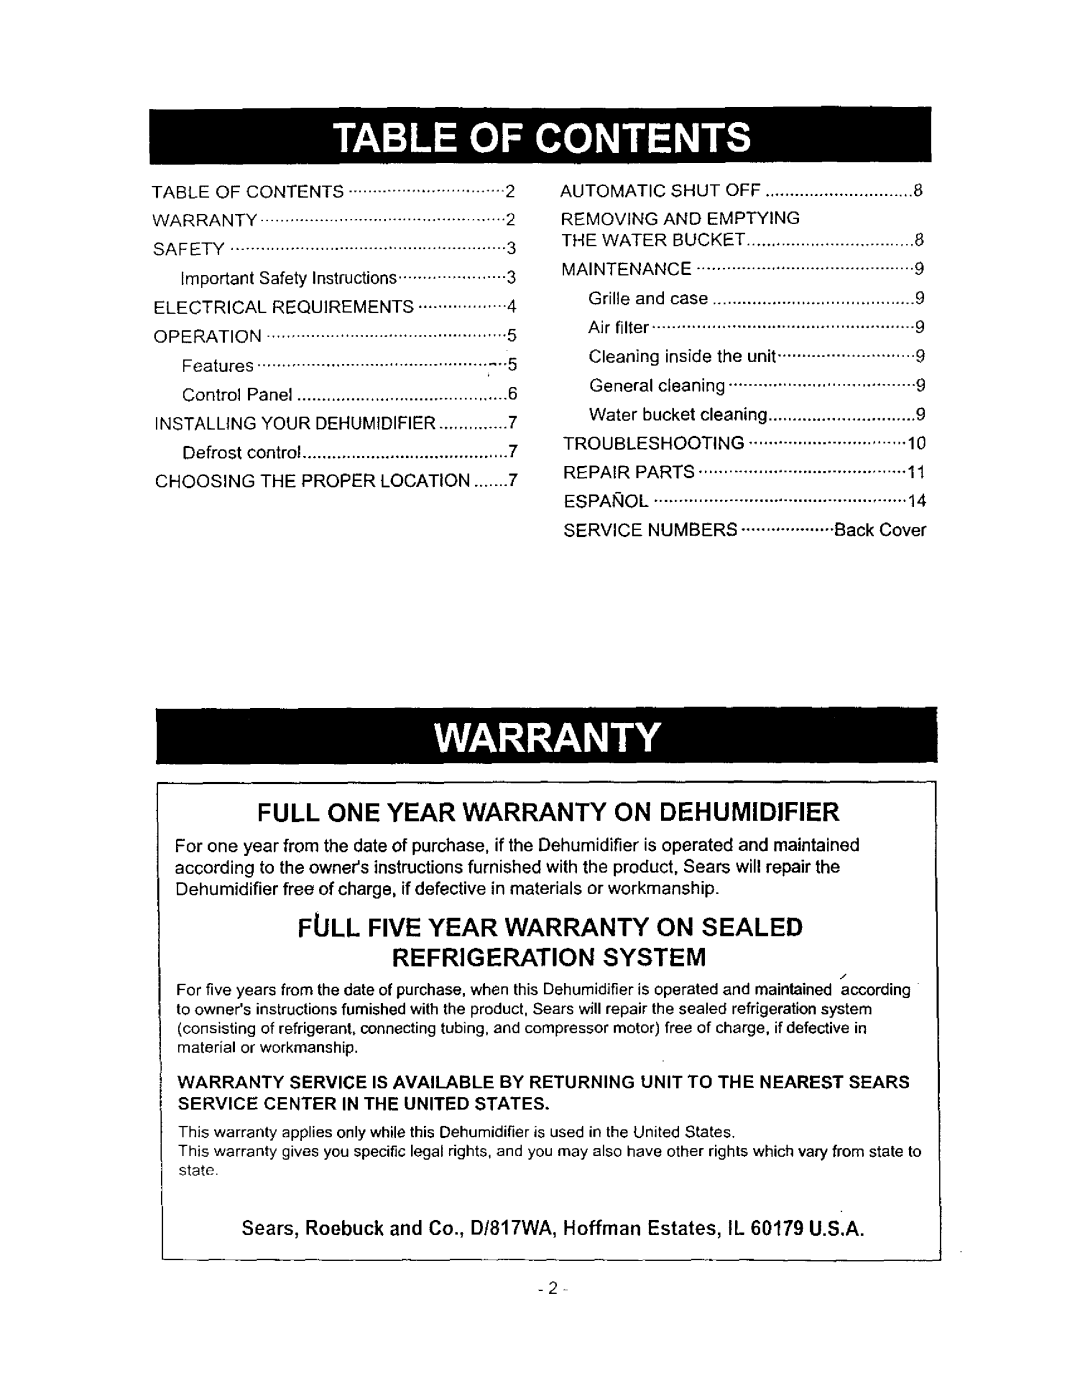 Kenmore 580.5145 Flill Five Year Warranty On Sealed, Refrigeration System, Full One Year Warranty On Dehumidifier 